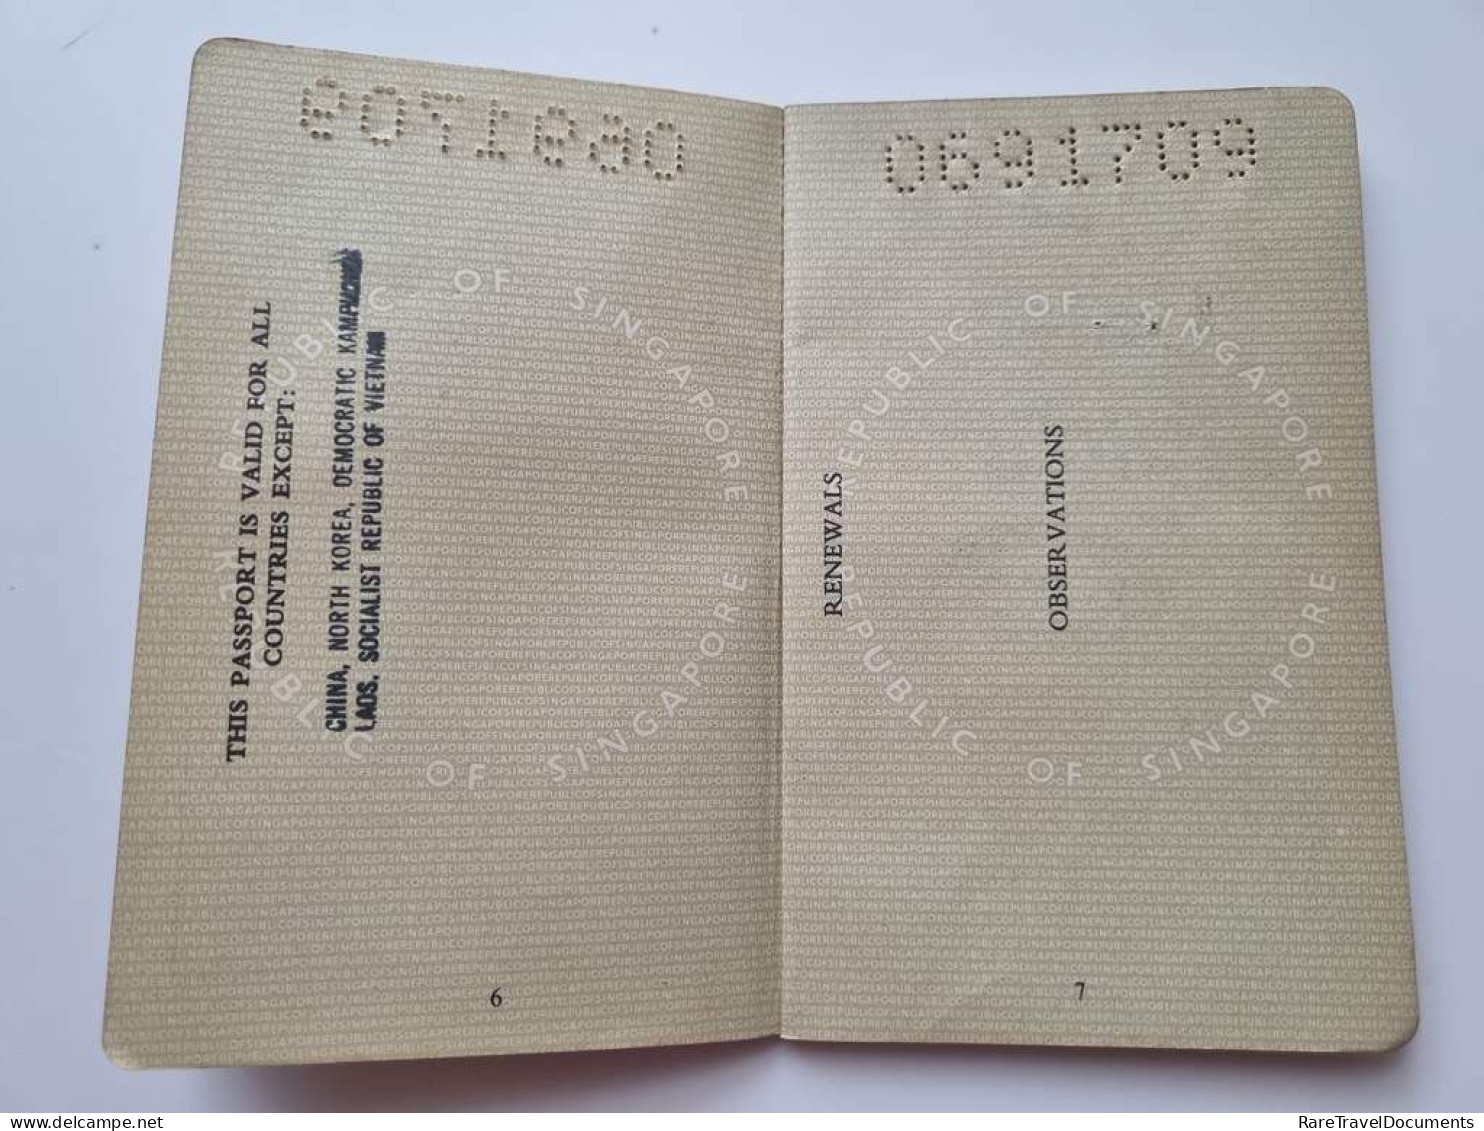 SINGAPORE Passport Passeport Reisepass of a School Principal - FREE SHIPPING!